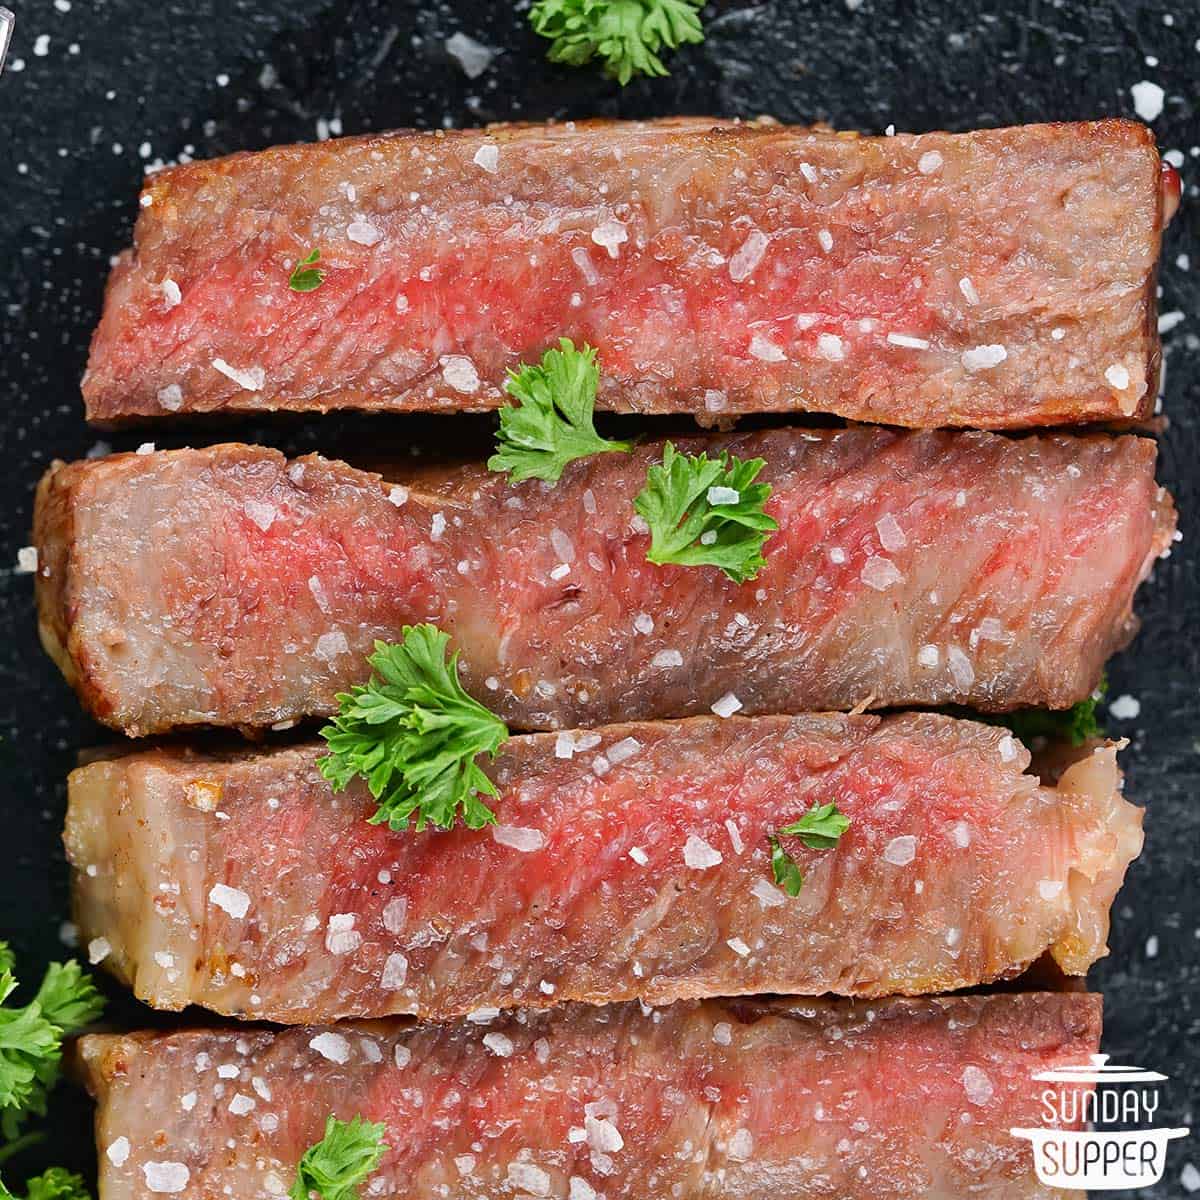 slices of wagyu steak seasoned with salt